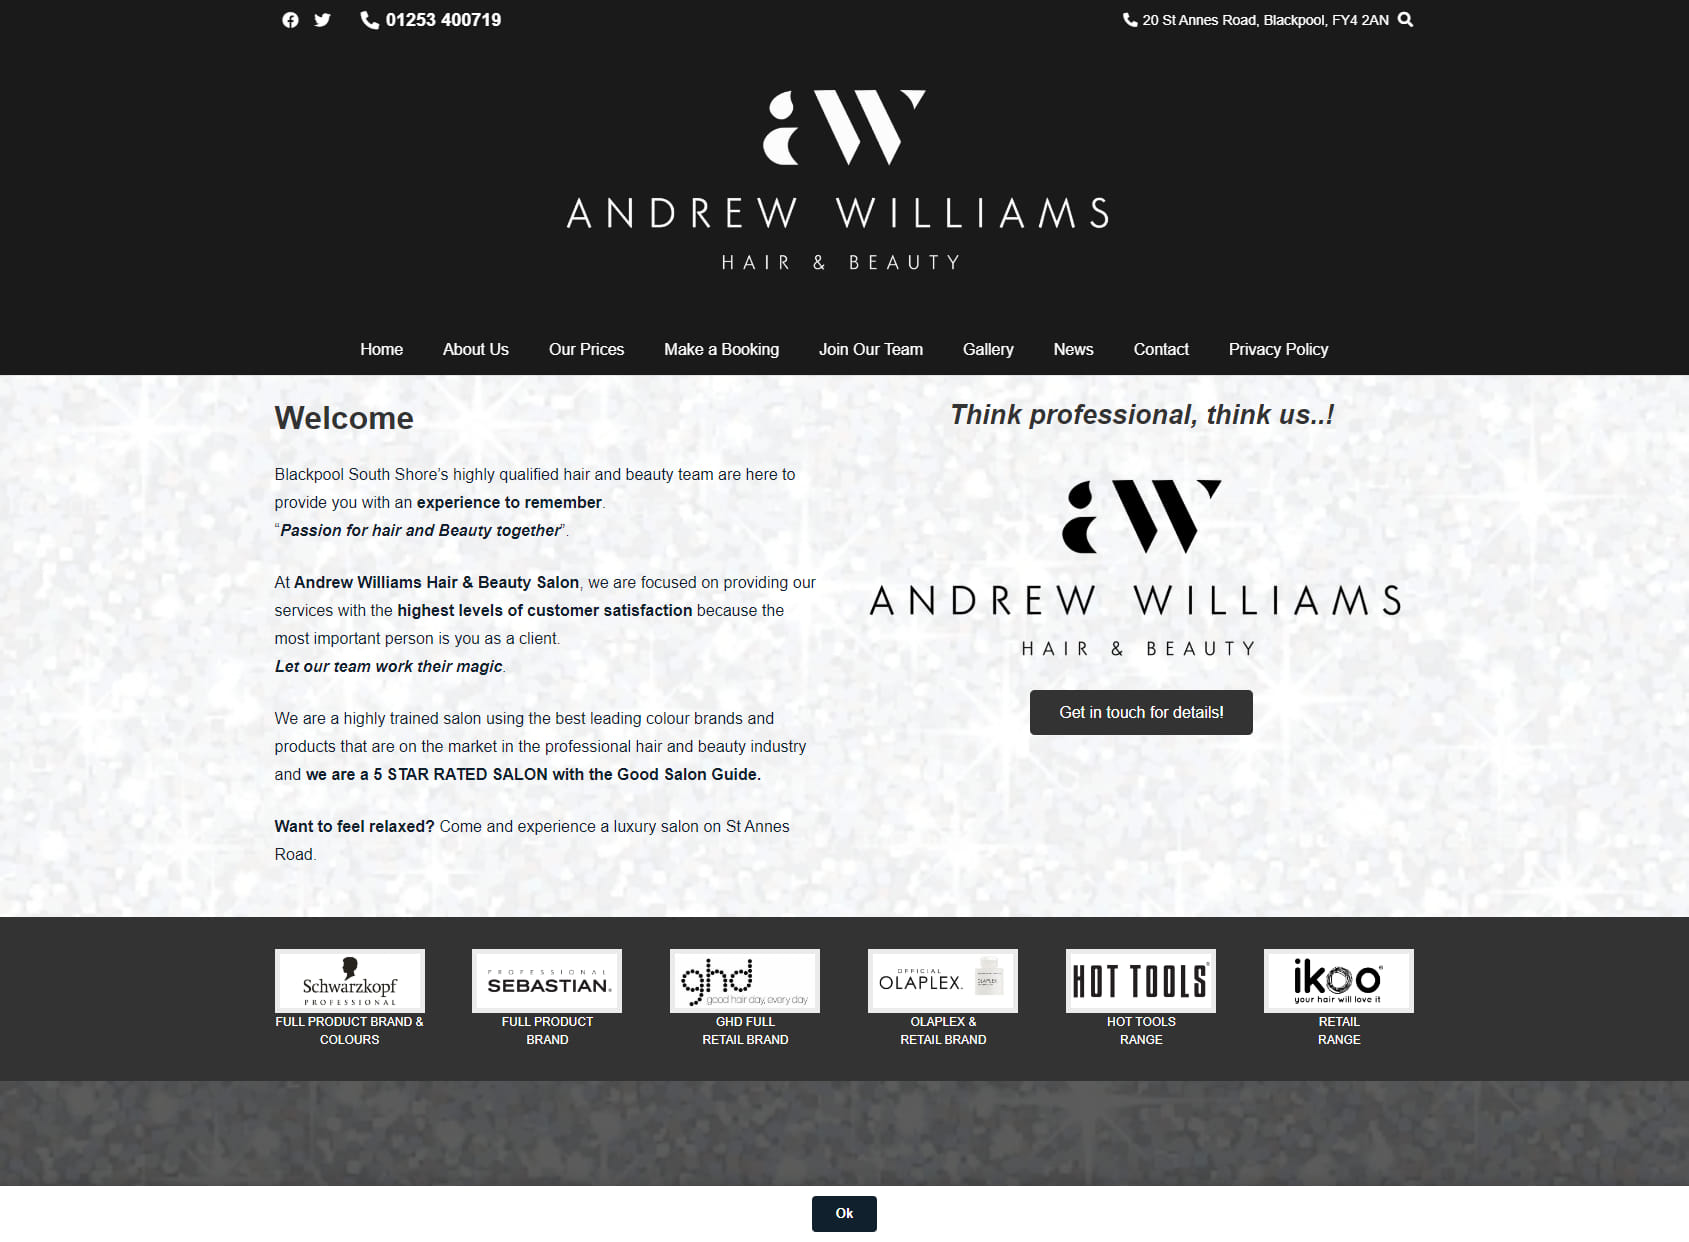 Andrew williams - Hair & Beauty Salon